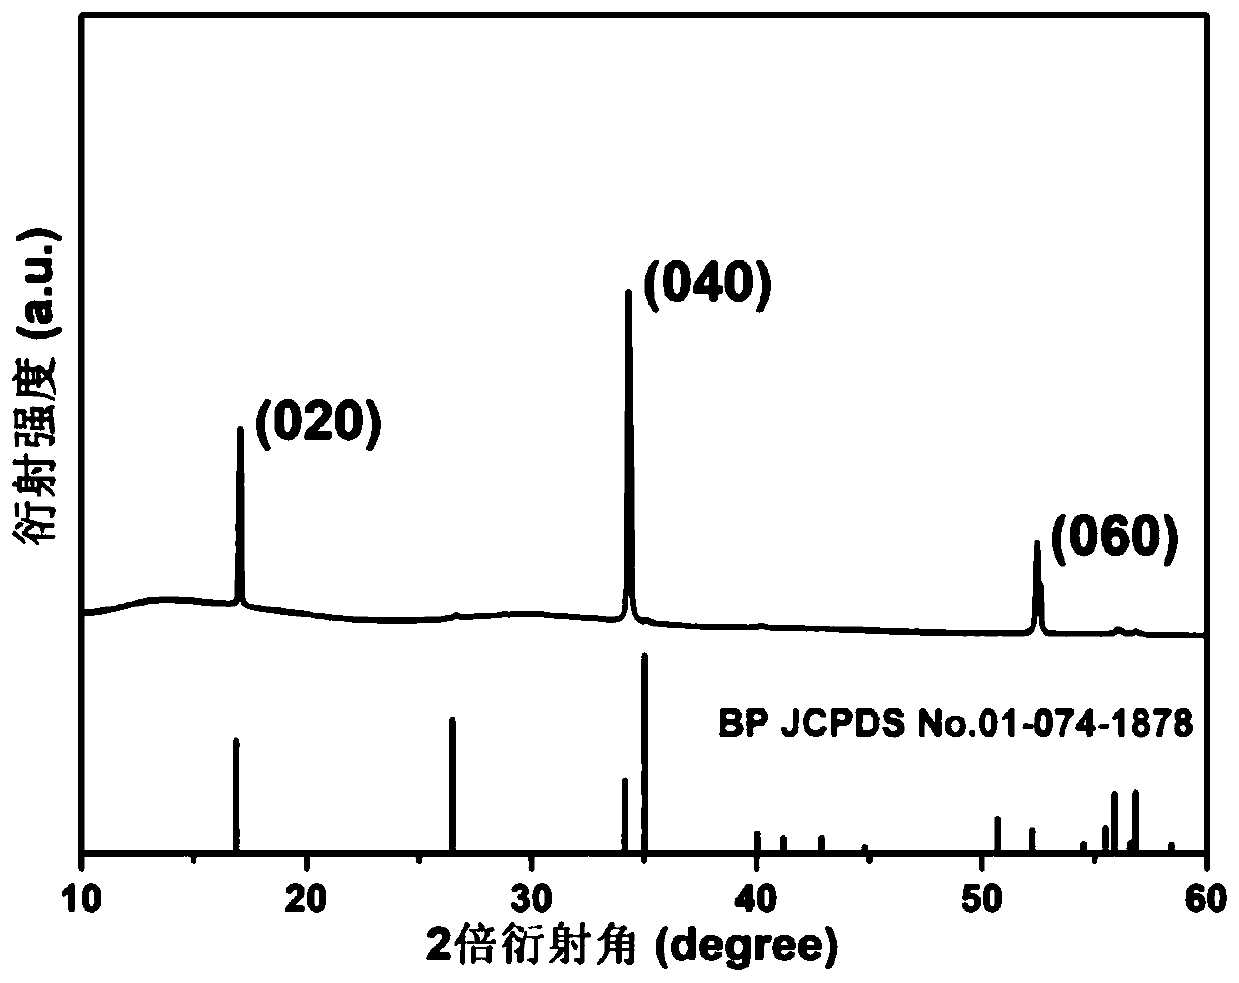 Preparation method of Sn3P4 induced two-dimensional black phosphorus crystals